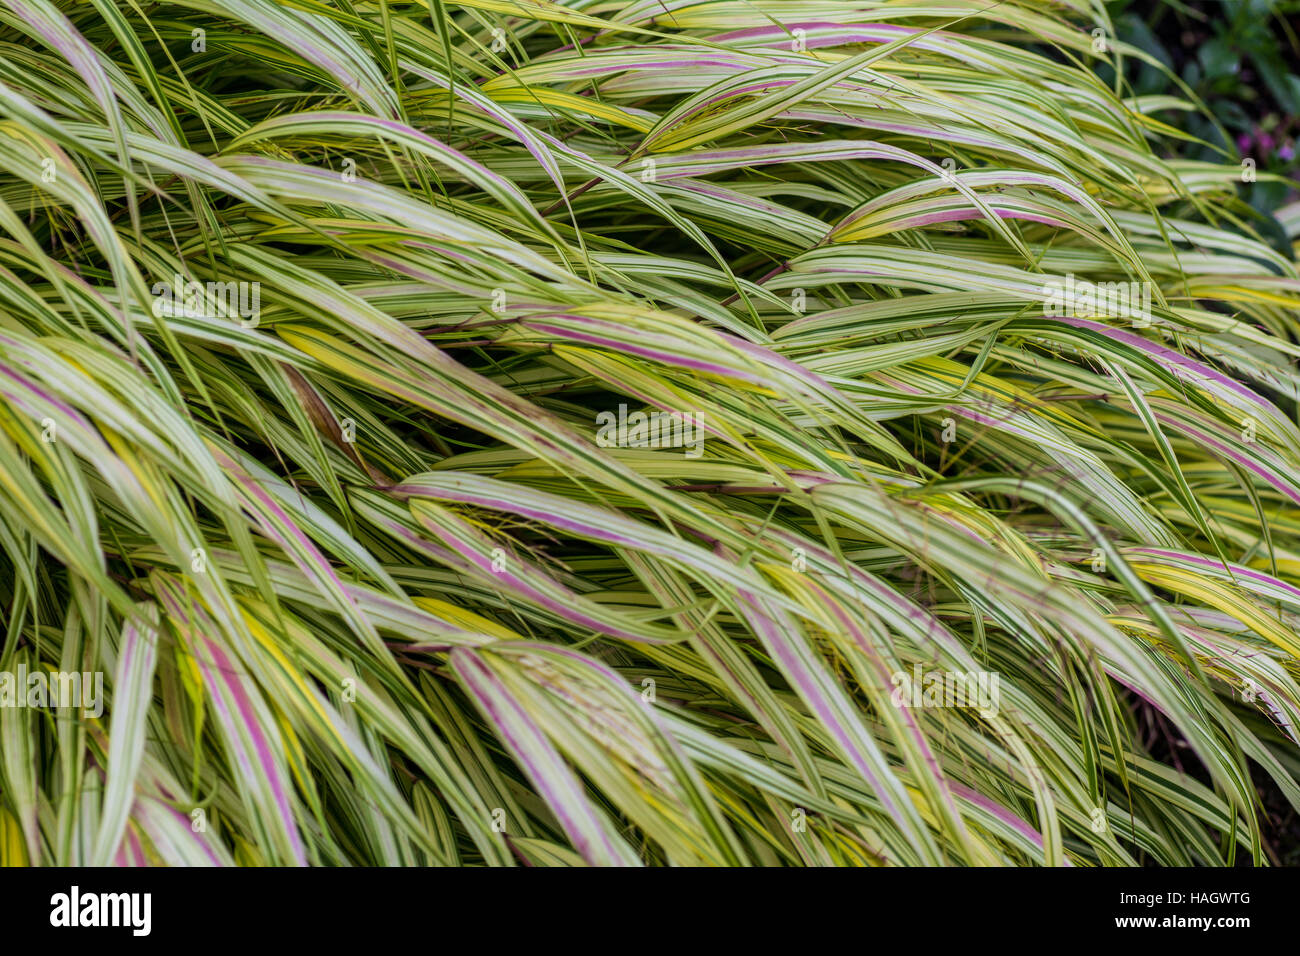 Onamental Grass as a background Stock Photo